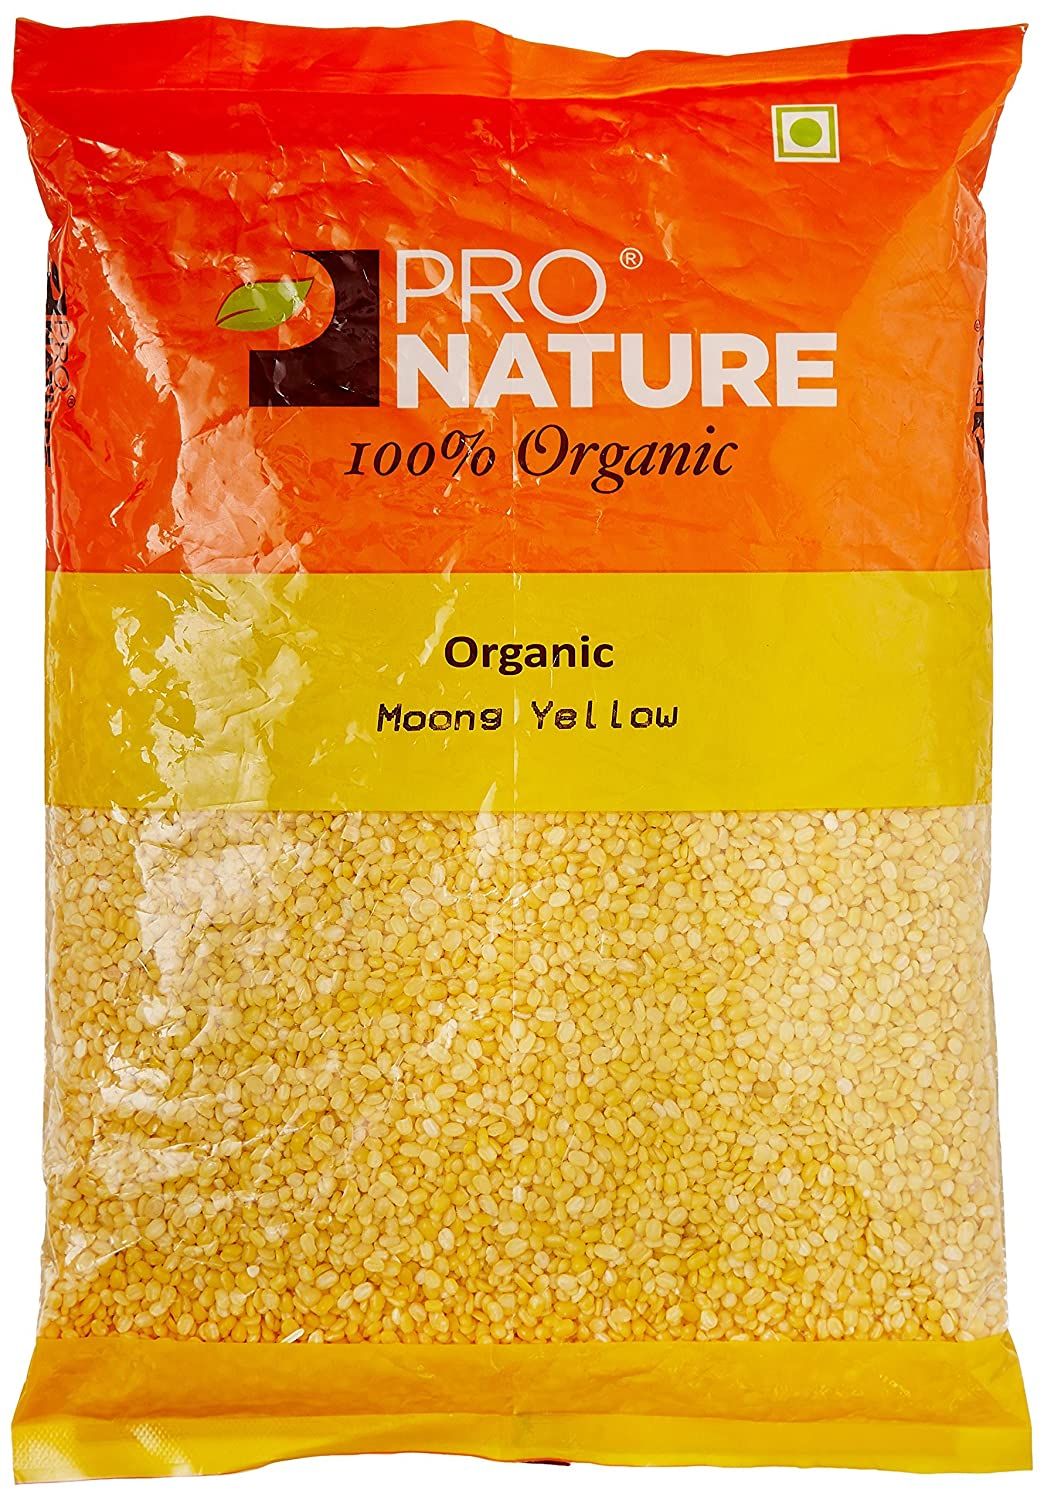 Pro Nature Organic Moong Yellow Image